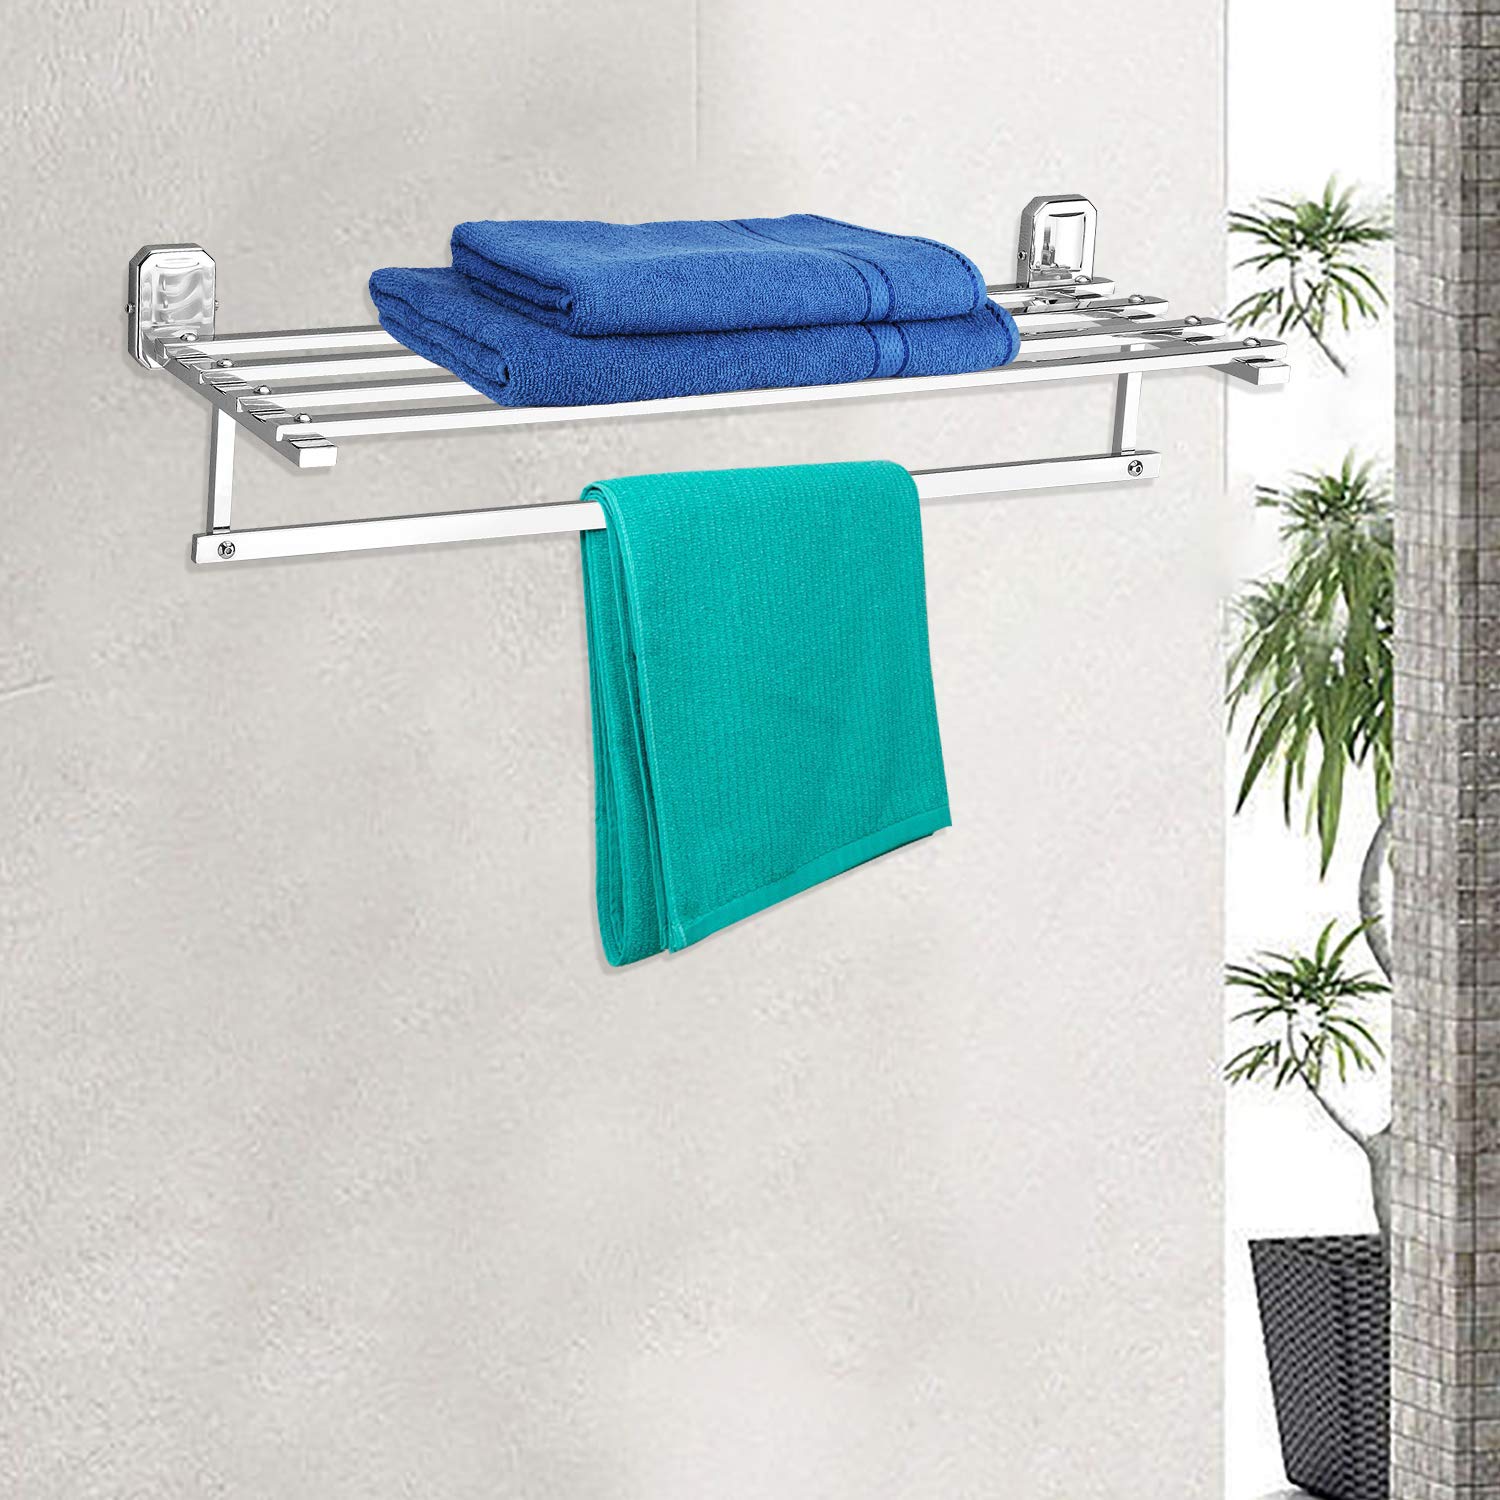 Plantex Stainless Steel 304 Grade Cute Towel Rack for Bathroom/Towel Stand/Hanger/Bathroom Accessories(18 Inch-Chrome)